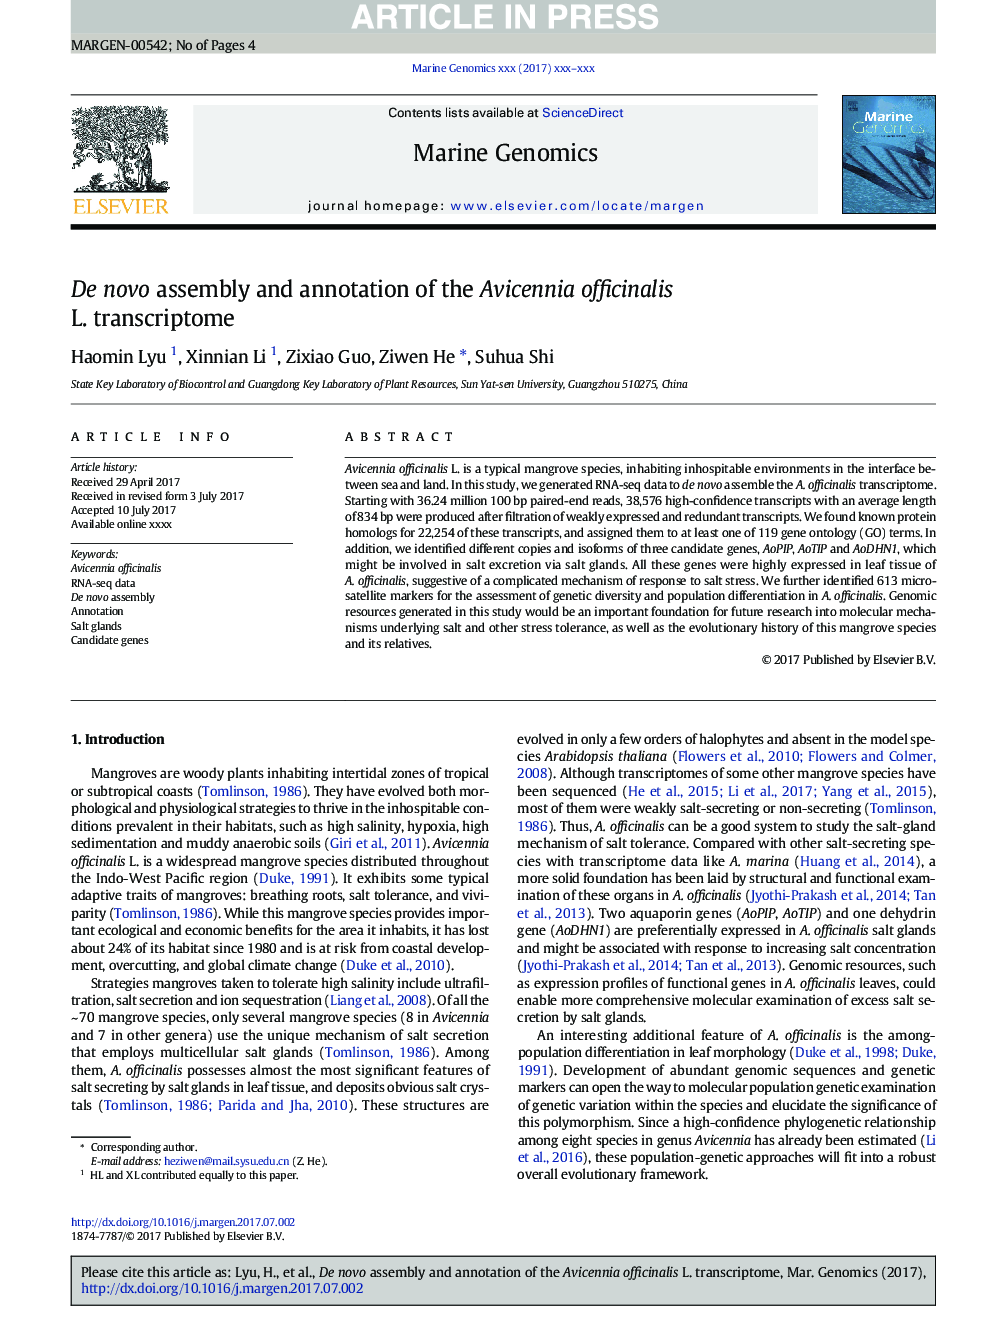 De novo assembly and annotation of the Avicennia officinalis L. transcriptome